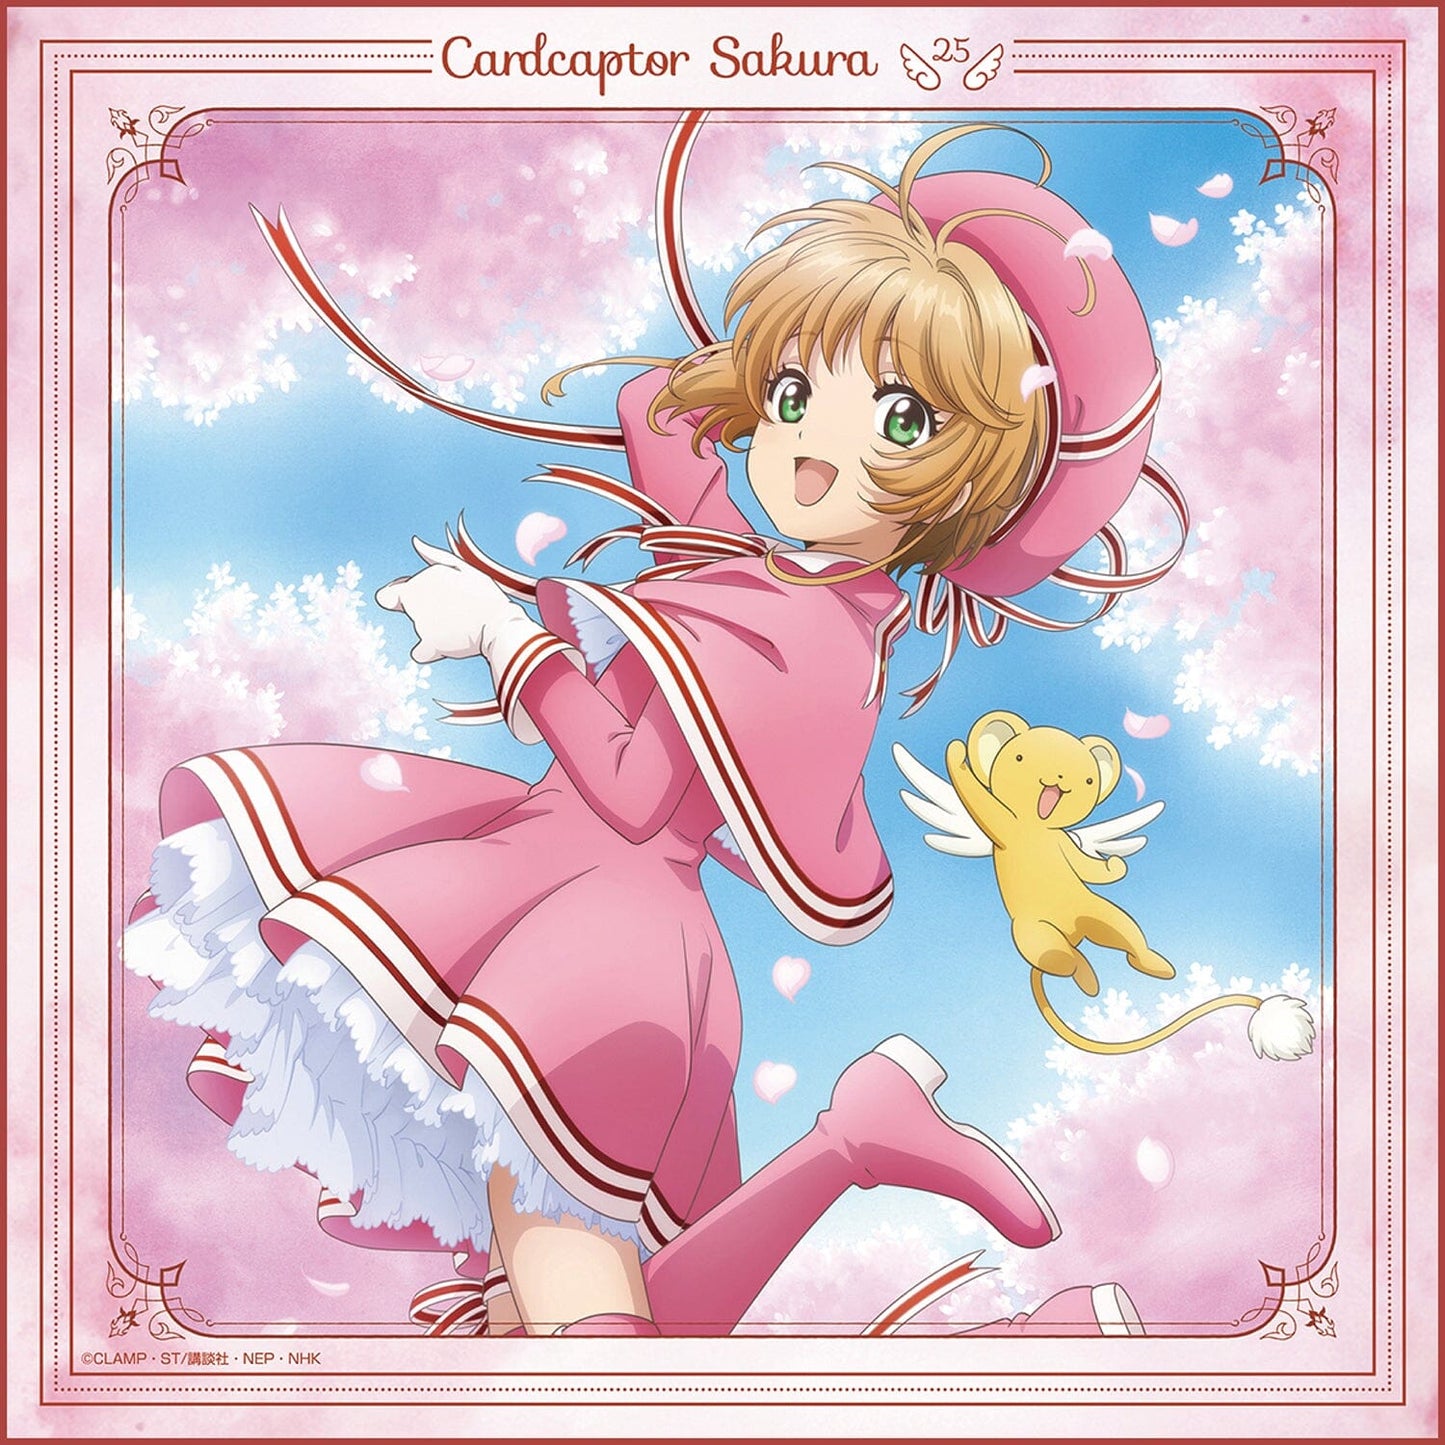 Cardcaptor Sakura" 25th Anniversary Ver. Lunch Cloth LC-1 Variety Anime Goods OSK 